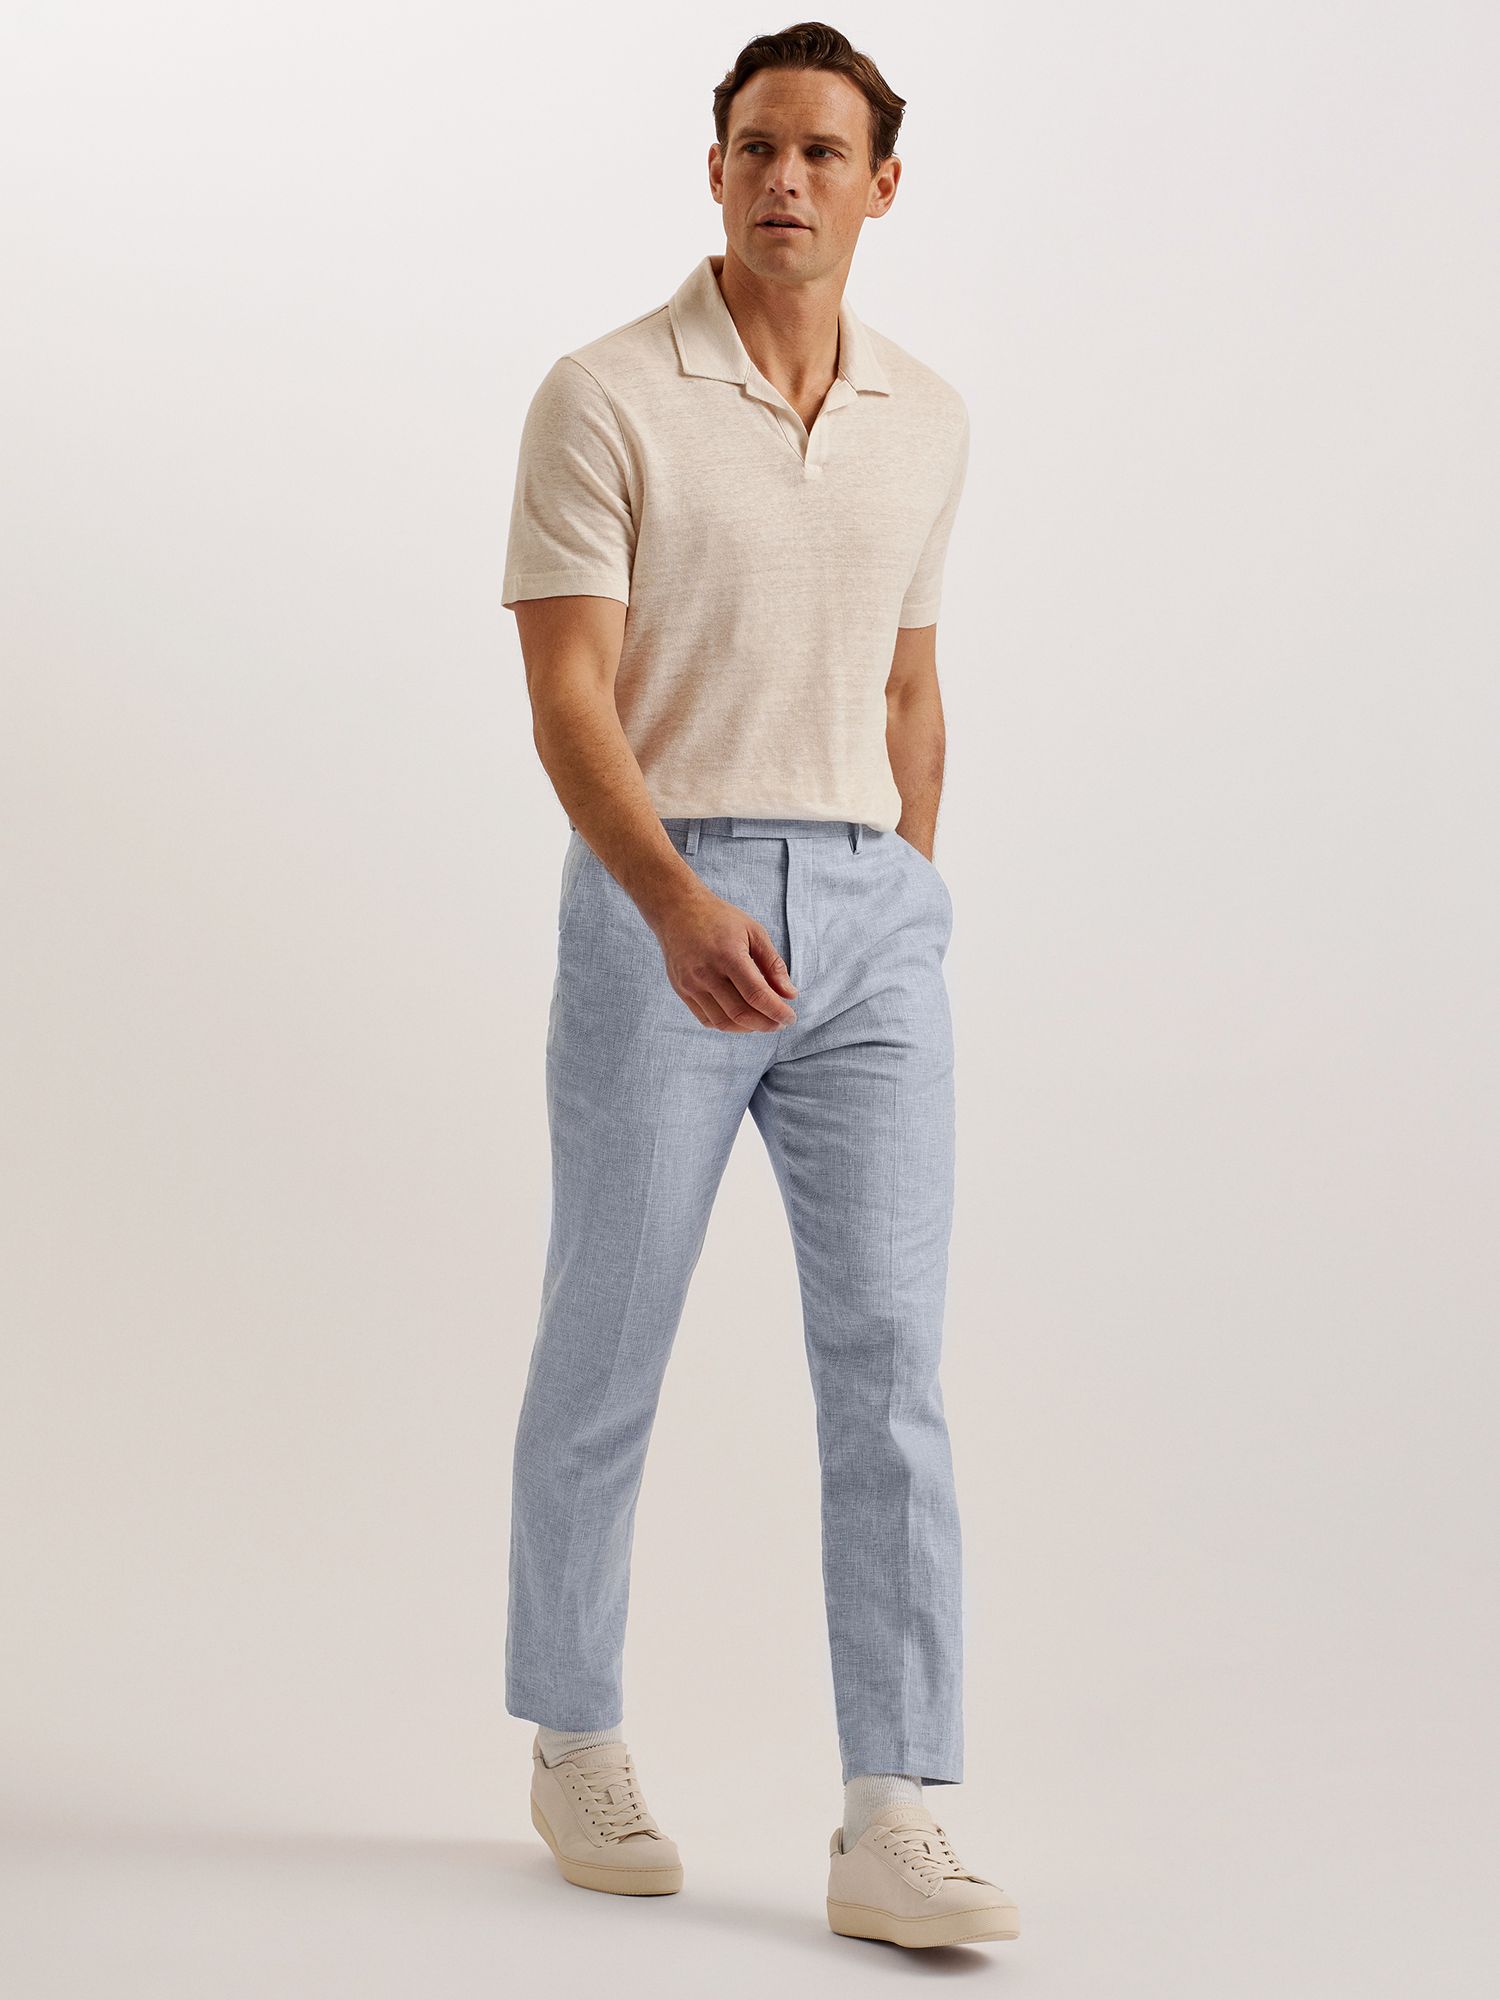 Ted Baker Damaskt Slim Cotton Linen Trousers, Blue Light, 28R